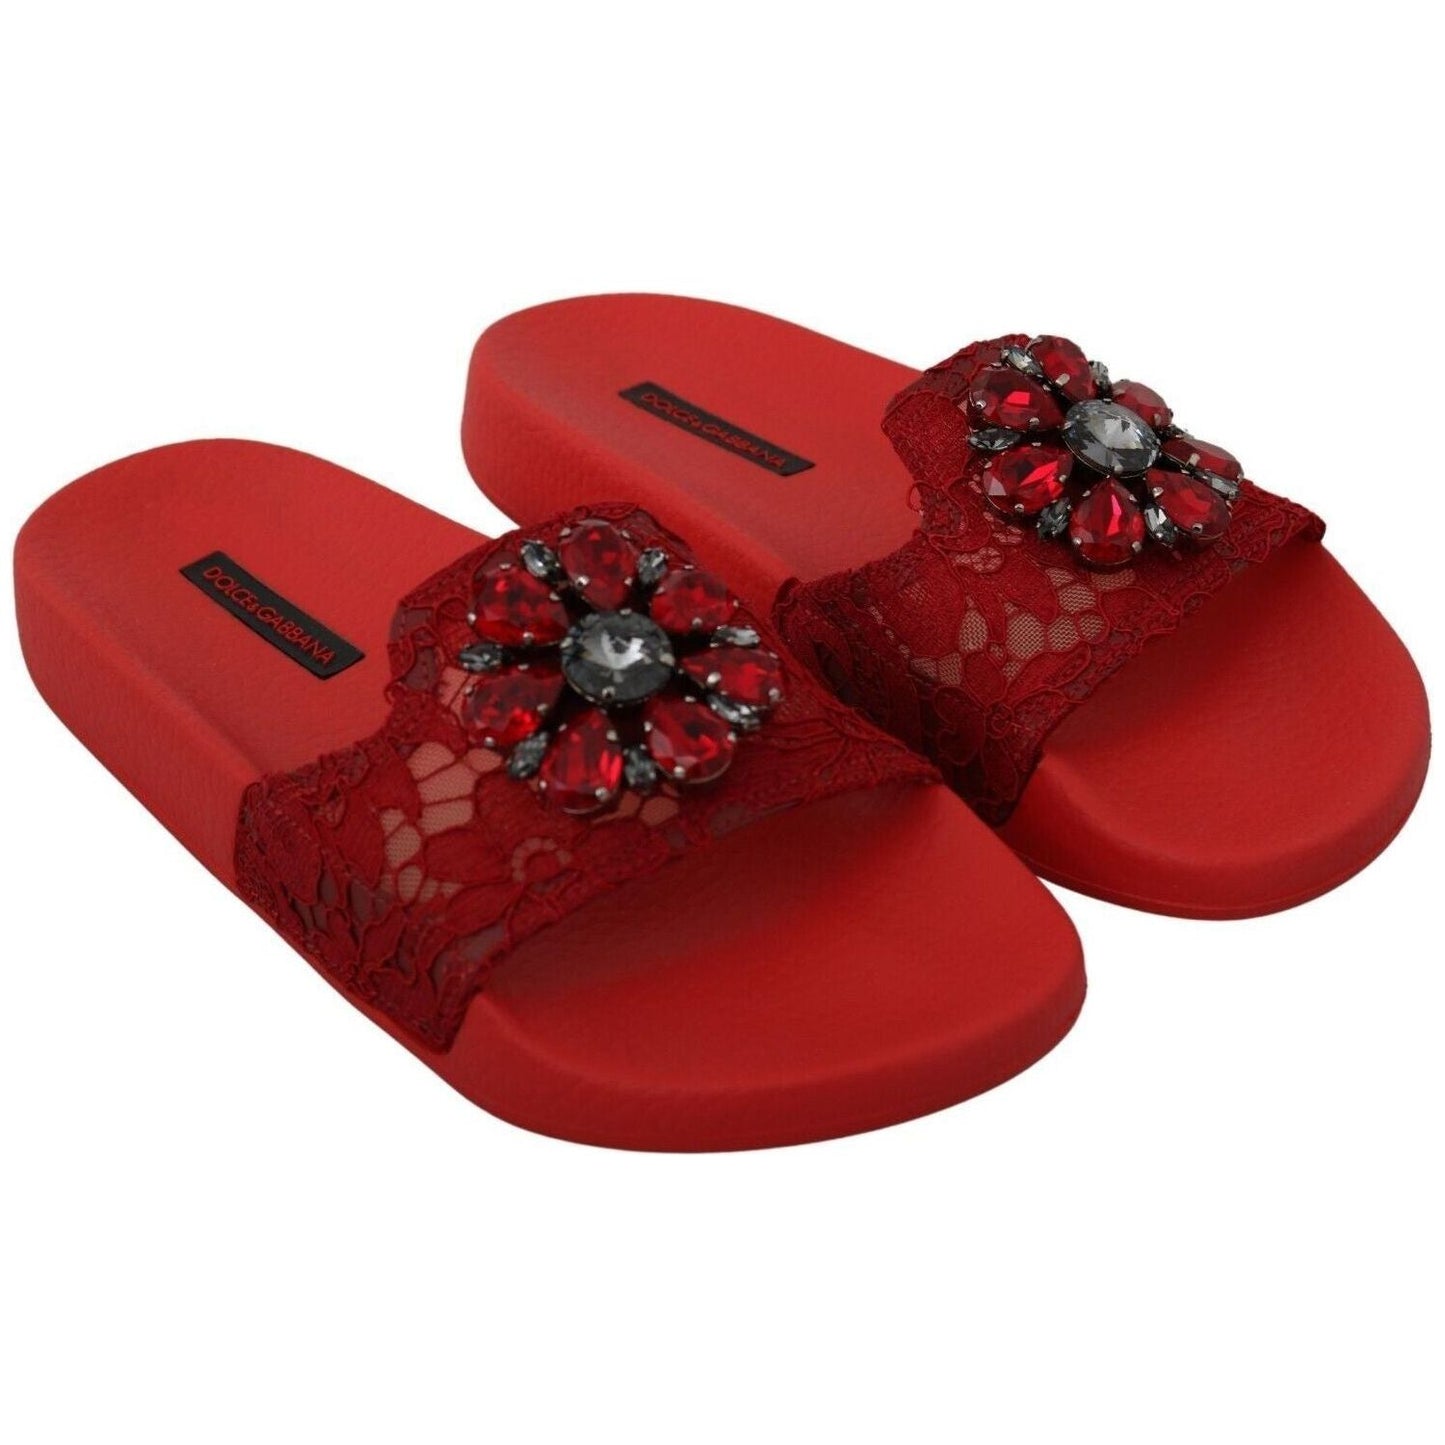 Dolce & Gabbana Floral Lace Crystal-Embellished Slide Flats red-lace-crystal-sandals-slides-beach-shoes s-l1600-30-20-0565169b-ae5.jpg